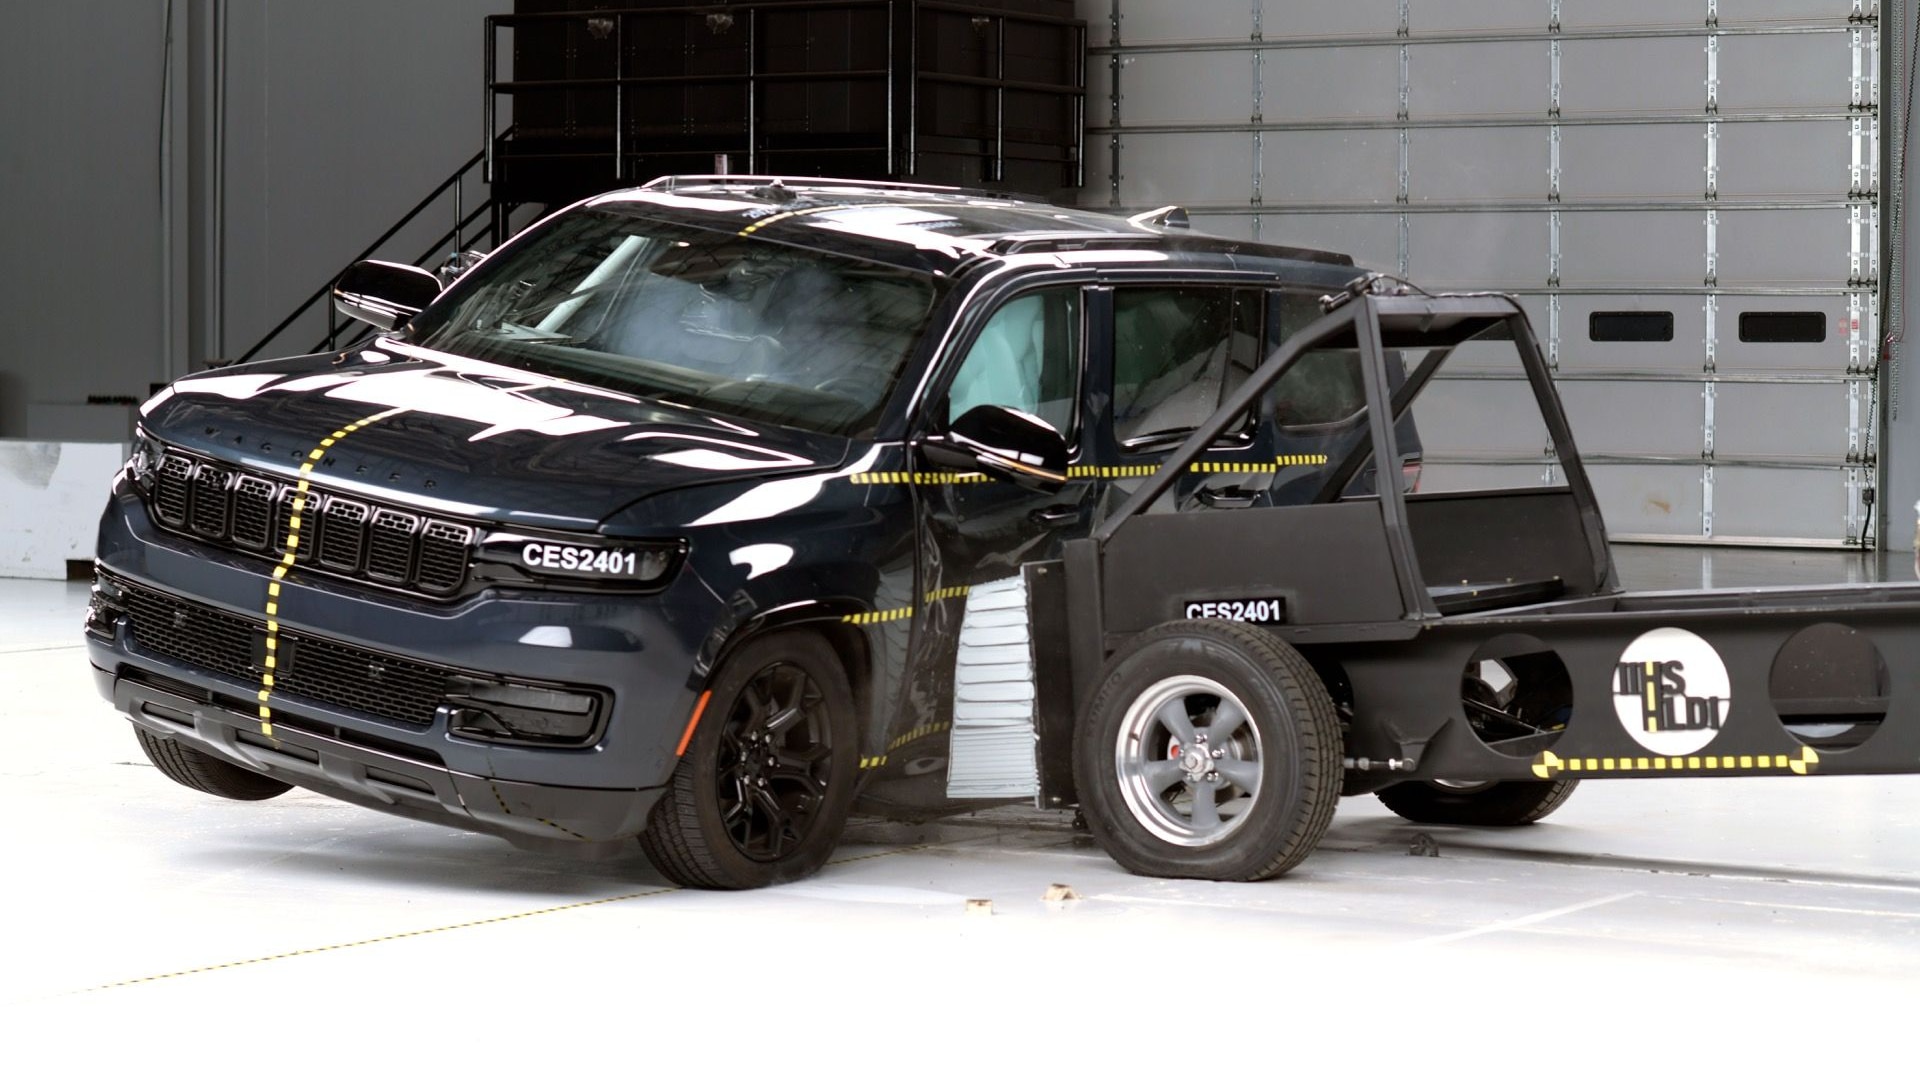 Jeep Wagoneer Tops IIHS Safety Ratings Among Large SUVs